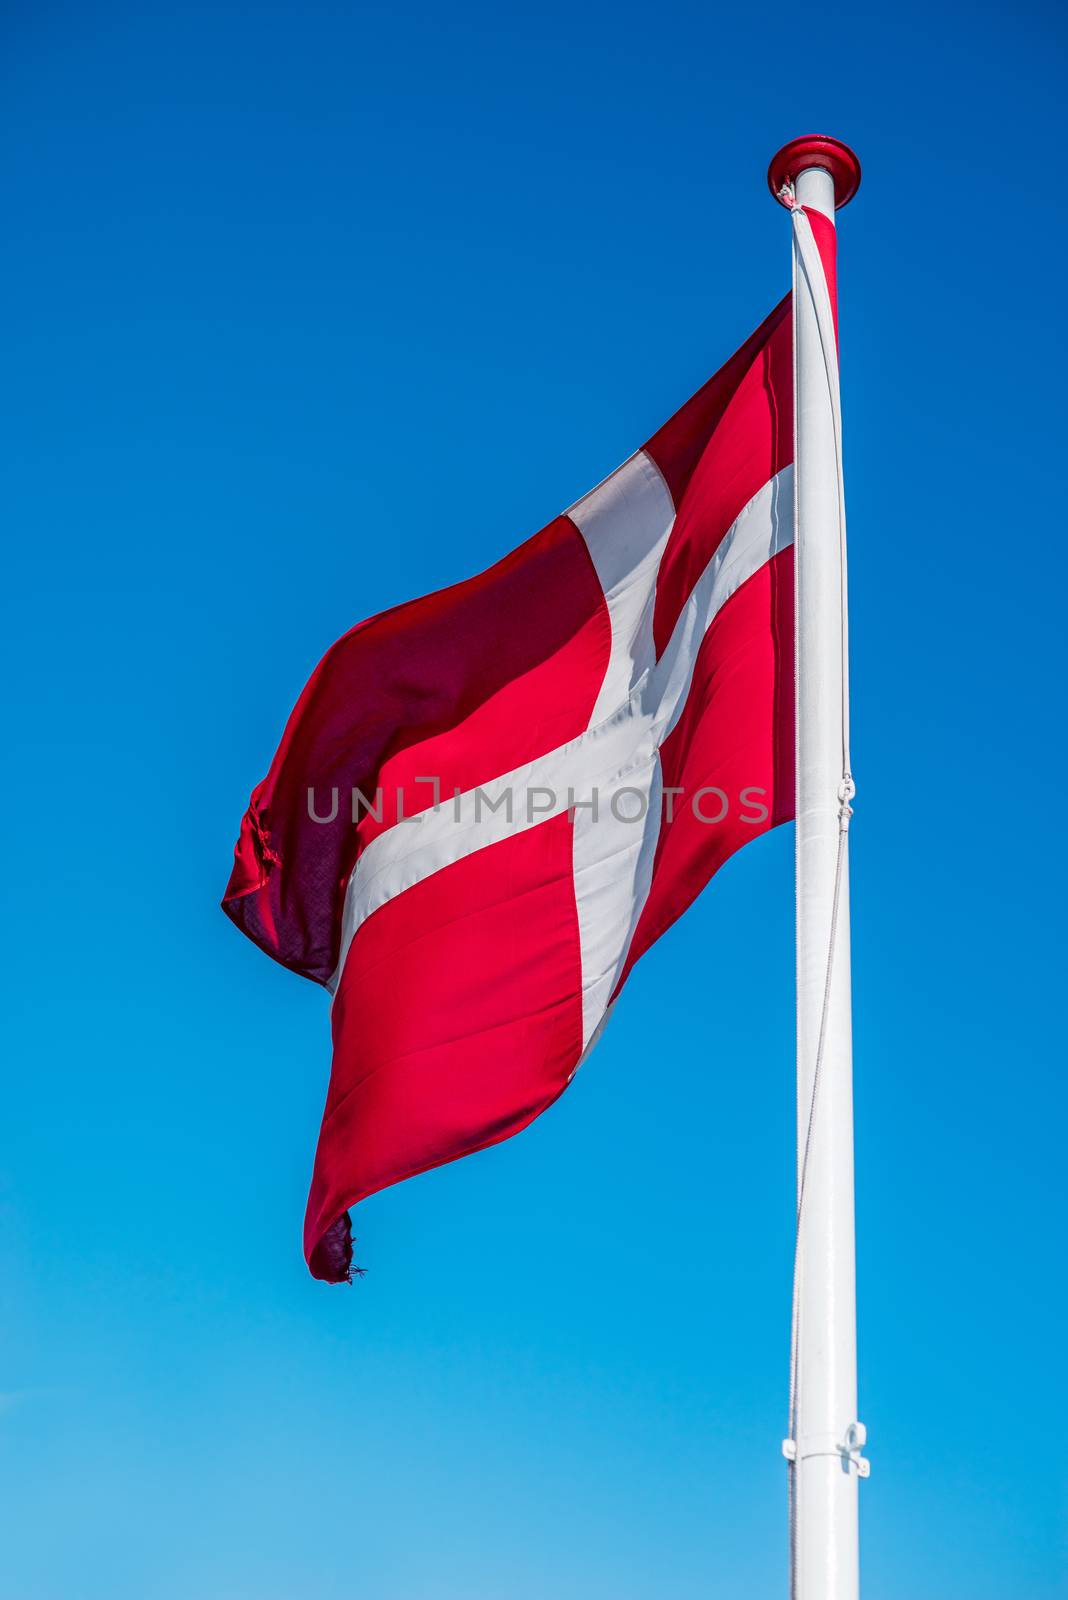 Denmark flag on a pole by Sportactive